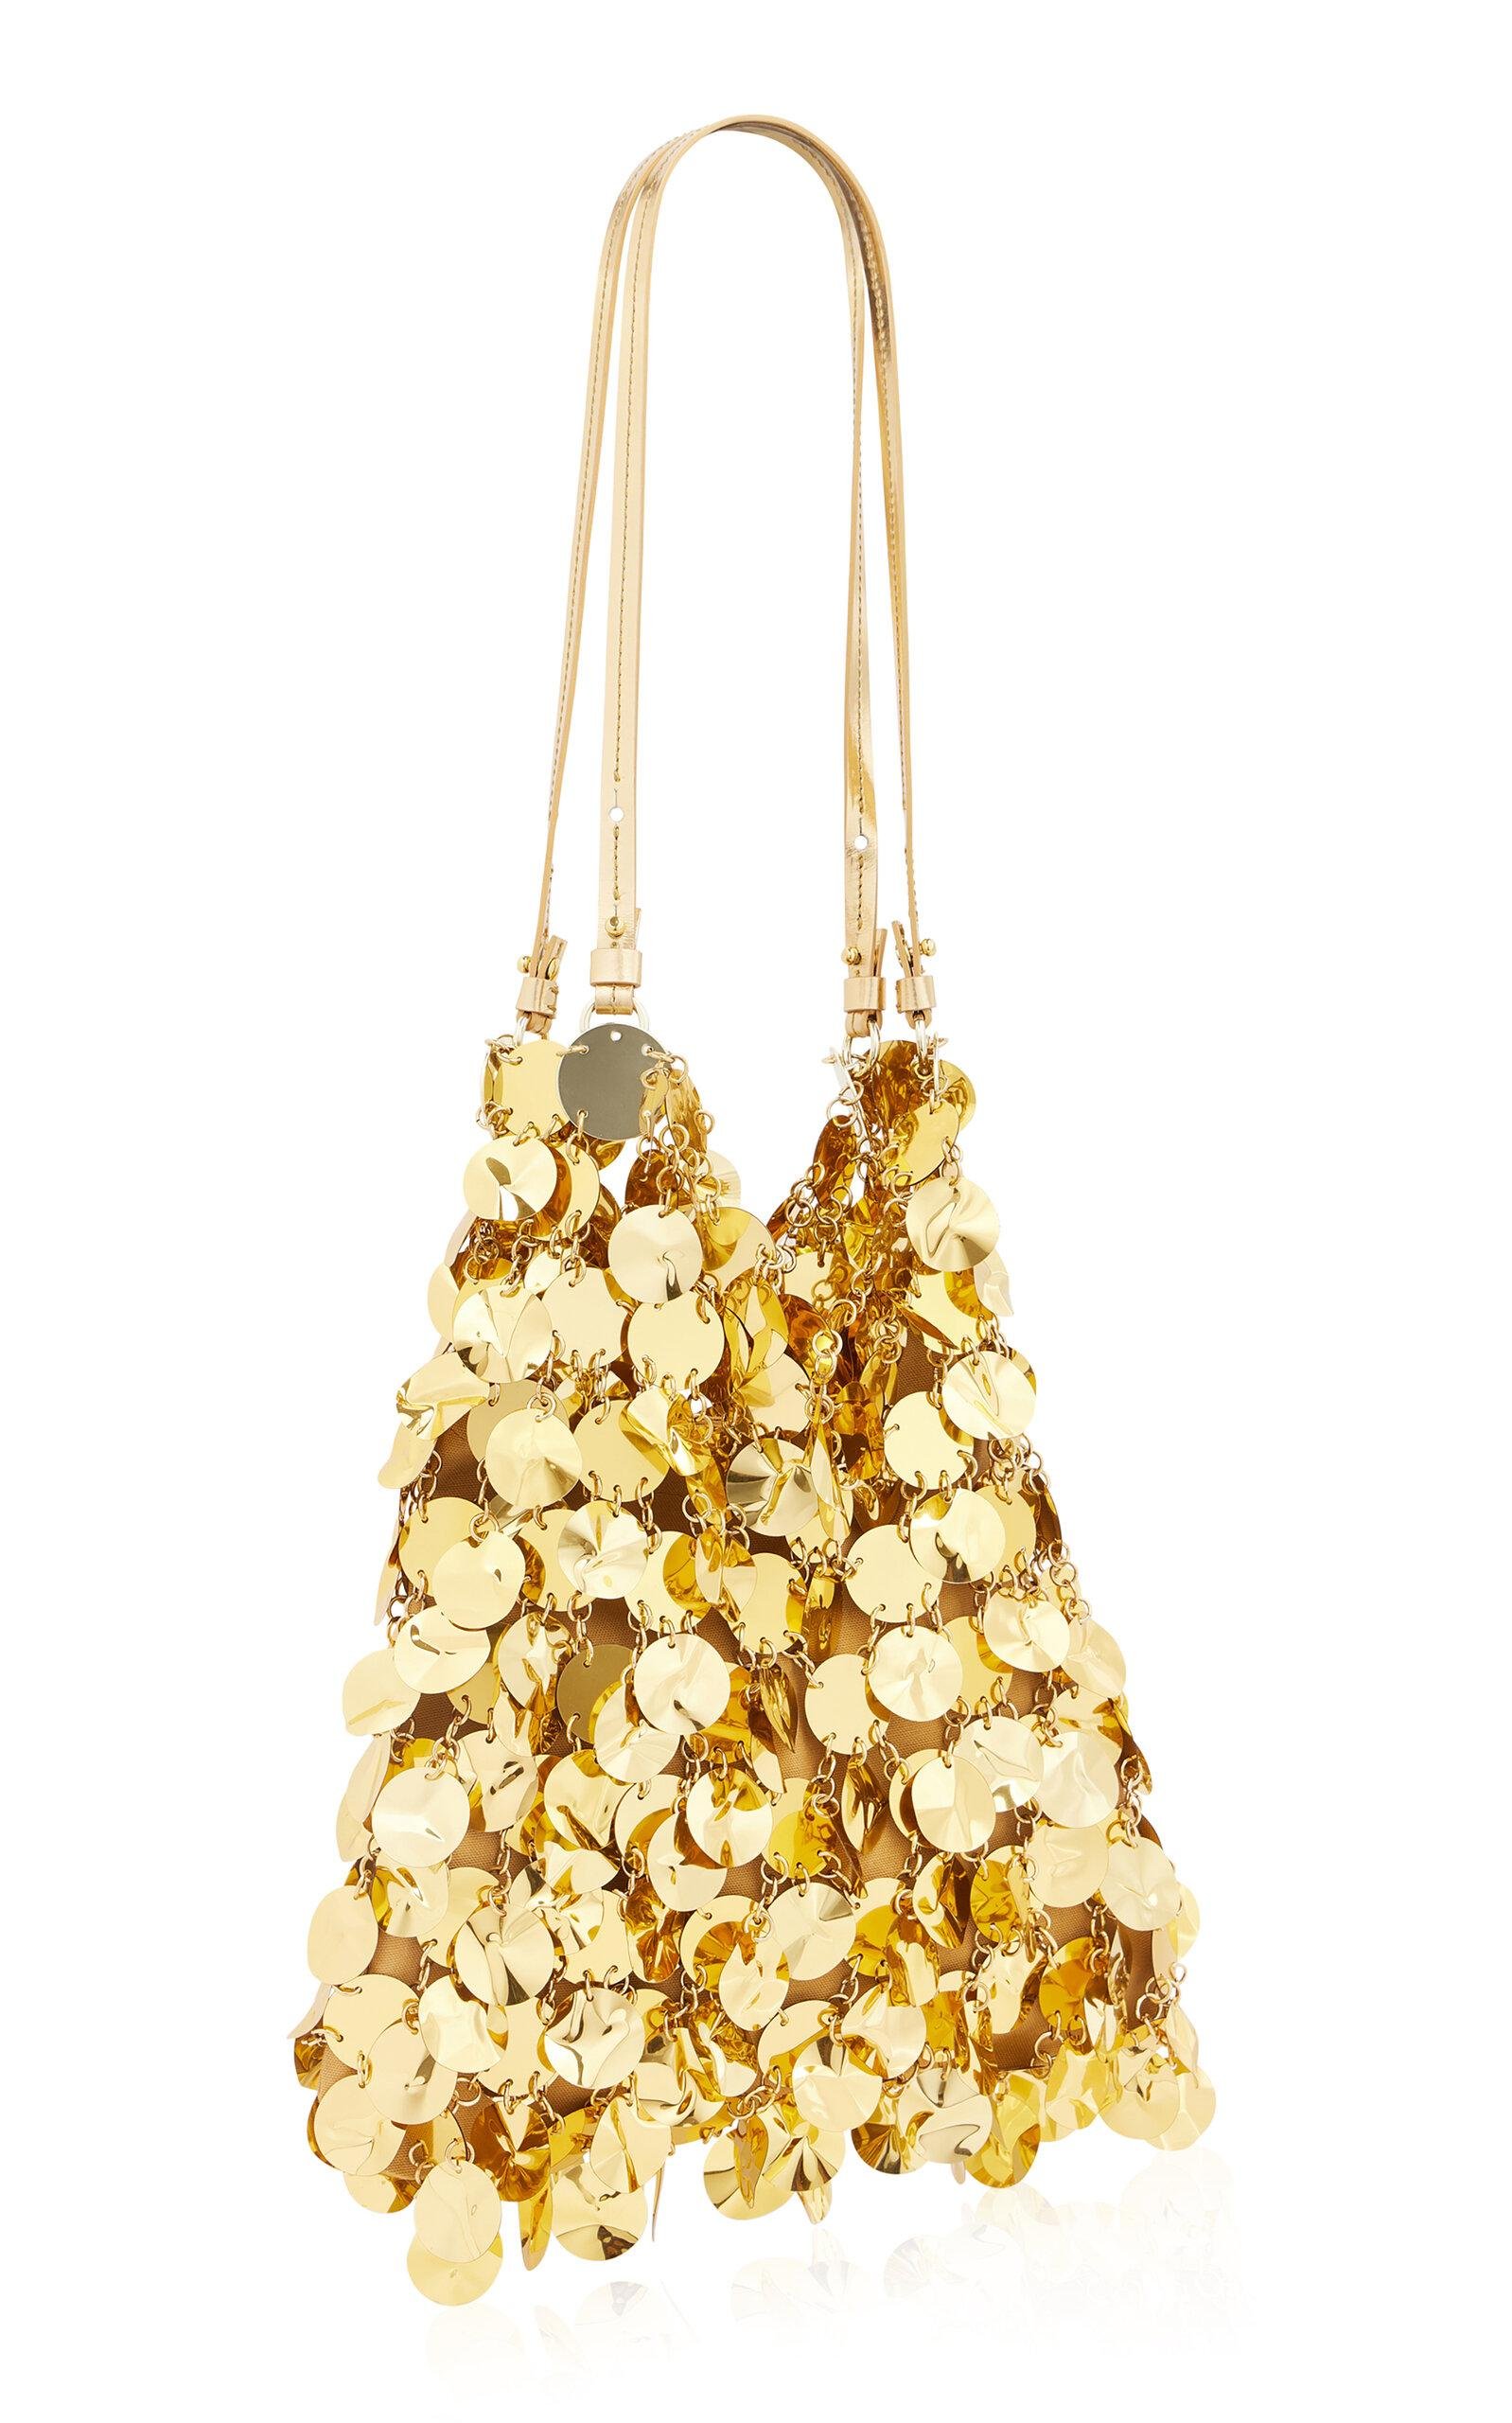 Rabanne - XL Sparkle Gold-Tone Paillette Hobo bag - Gold - OS - Moda Operandi by RABANNE